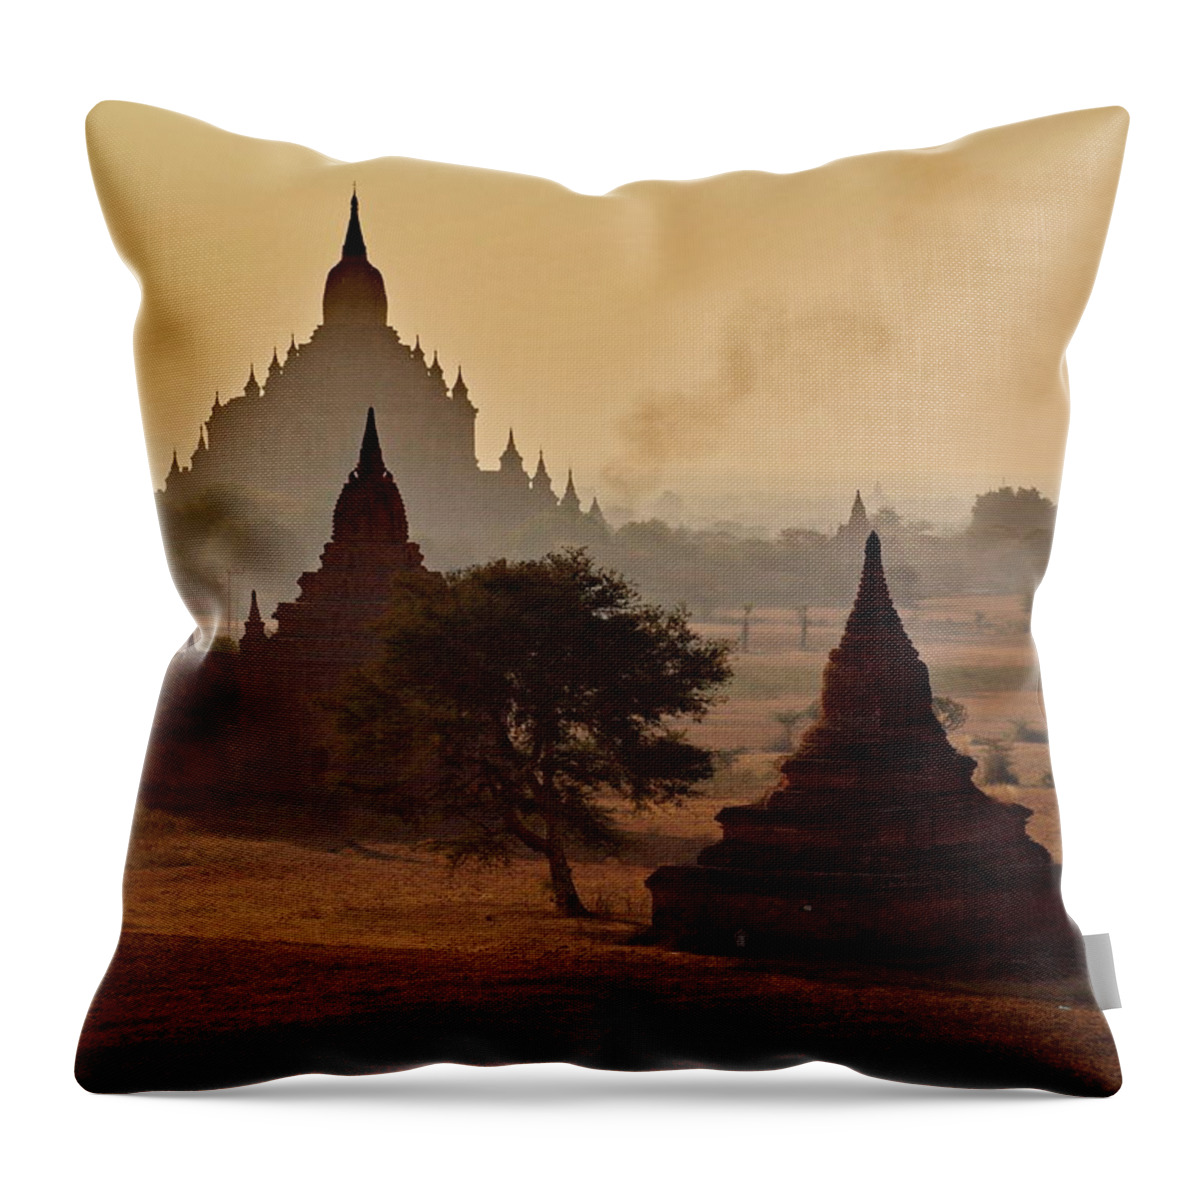 Pagoda Throw Pillow featuring the photograph Bagan Pagodas by Stefan Hajdu